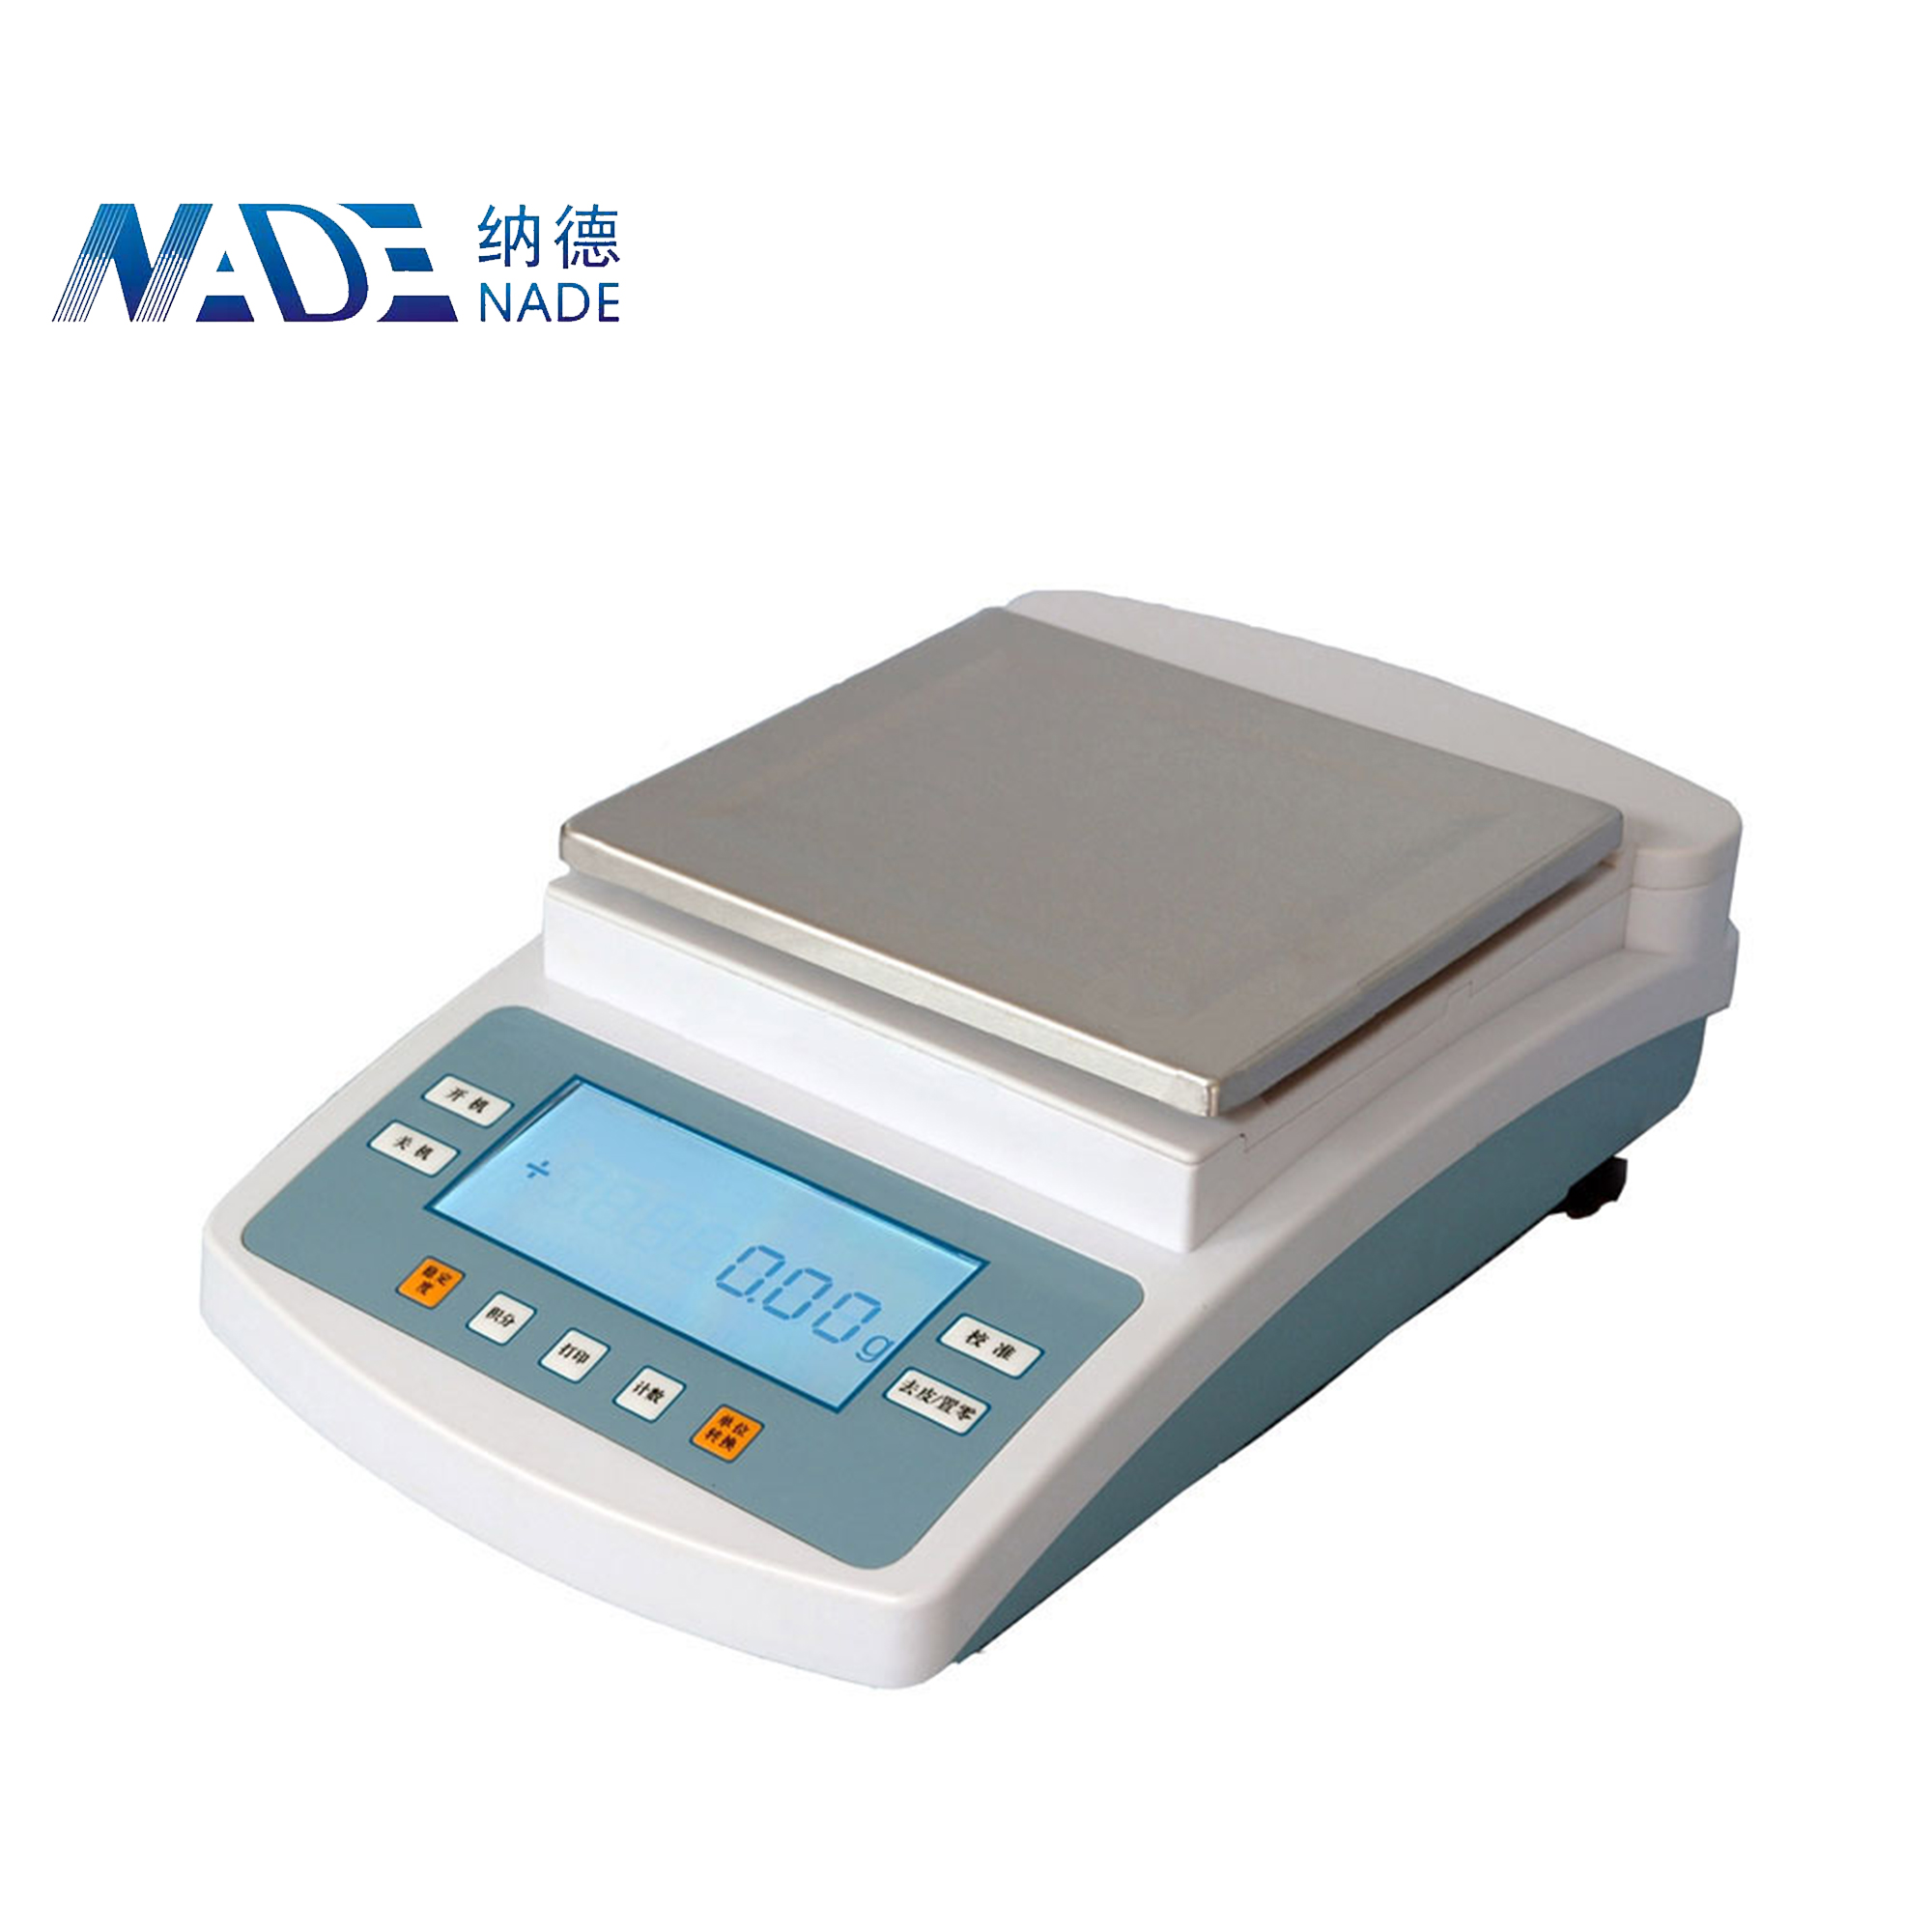 Nade JH Precision electronic balance smart balance & weighing scale JA41002 4100g/0.01g